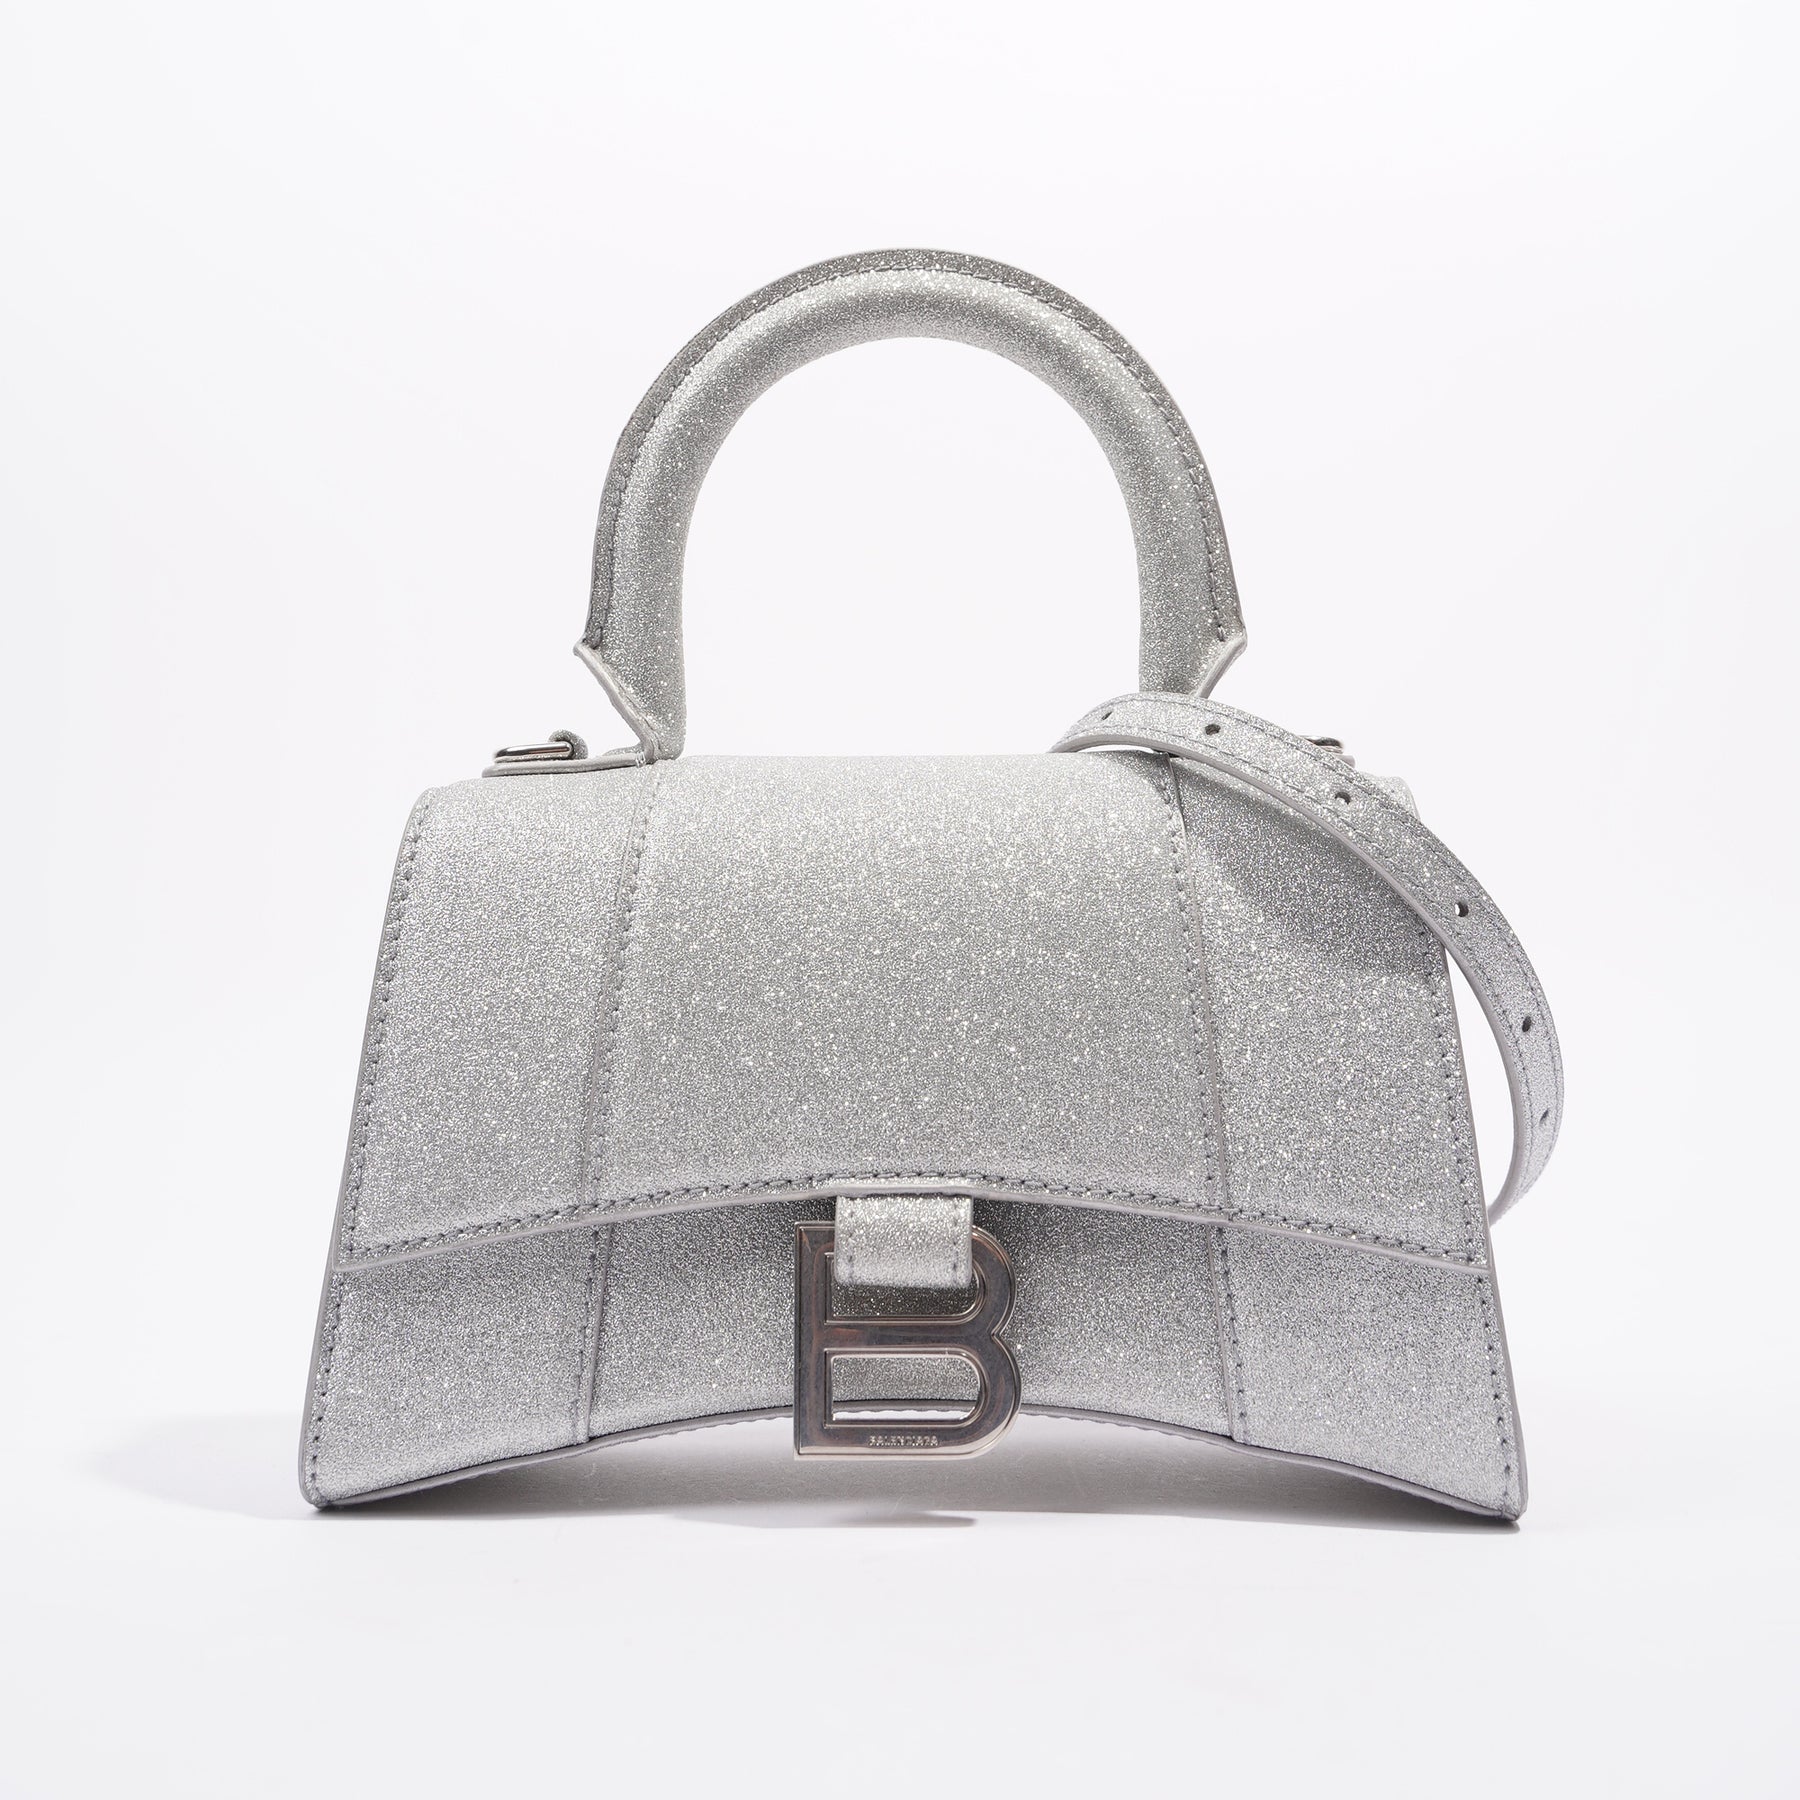 Balenciaga, Bags, Balenciaga Xs Silver Glitter Mini Hourglass Bag W Chain